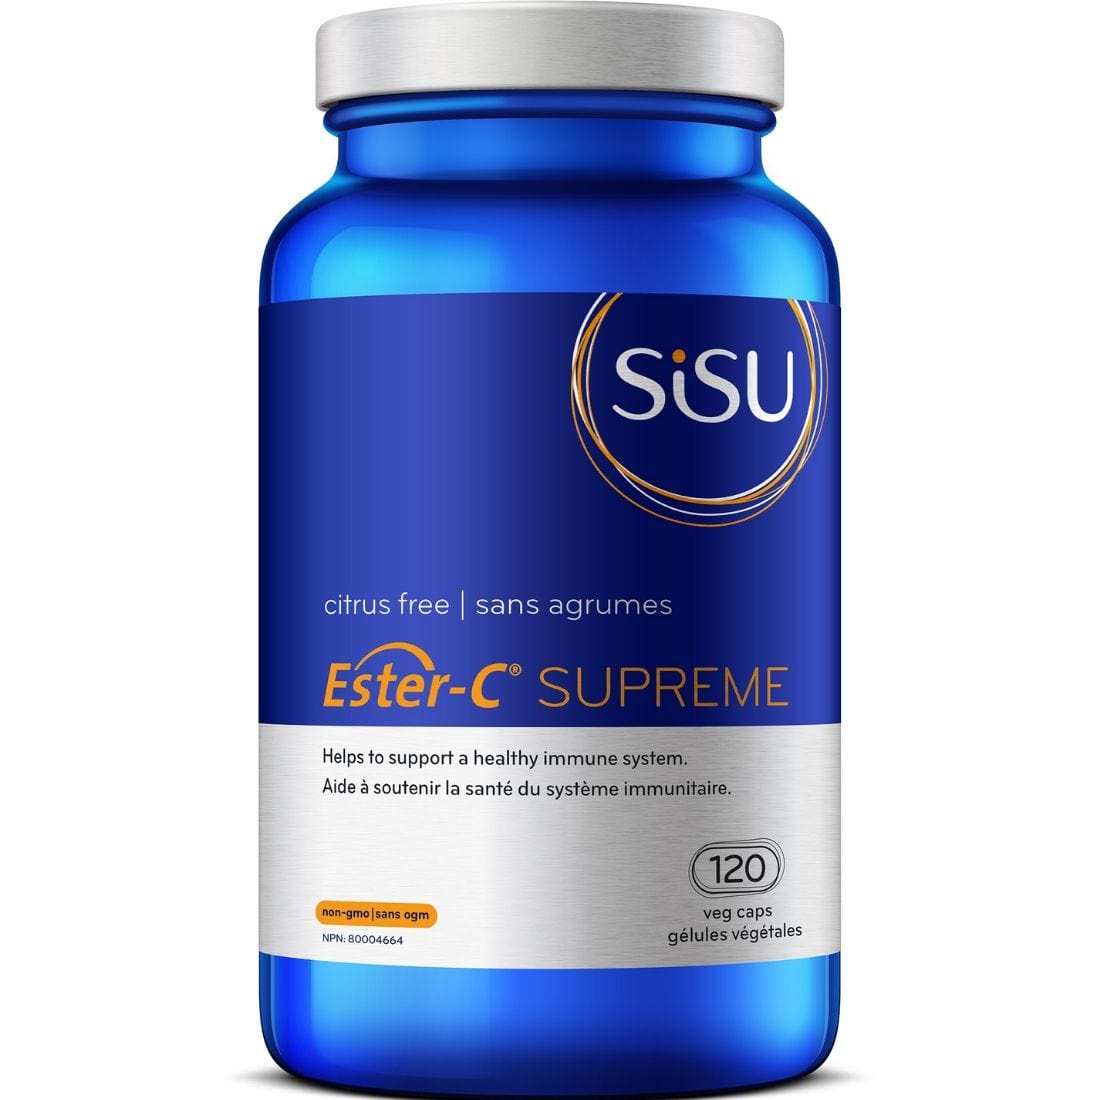 SISU Ester-C Supreme 600mg